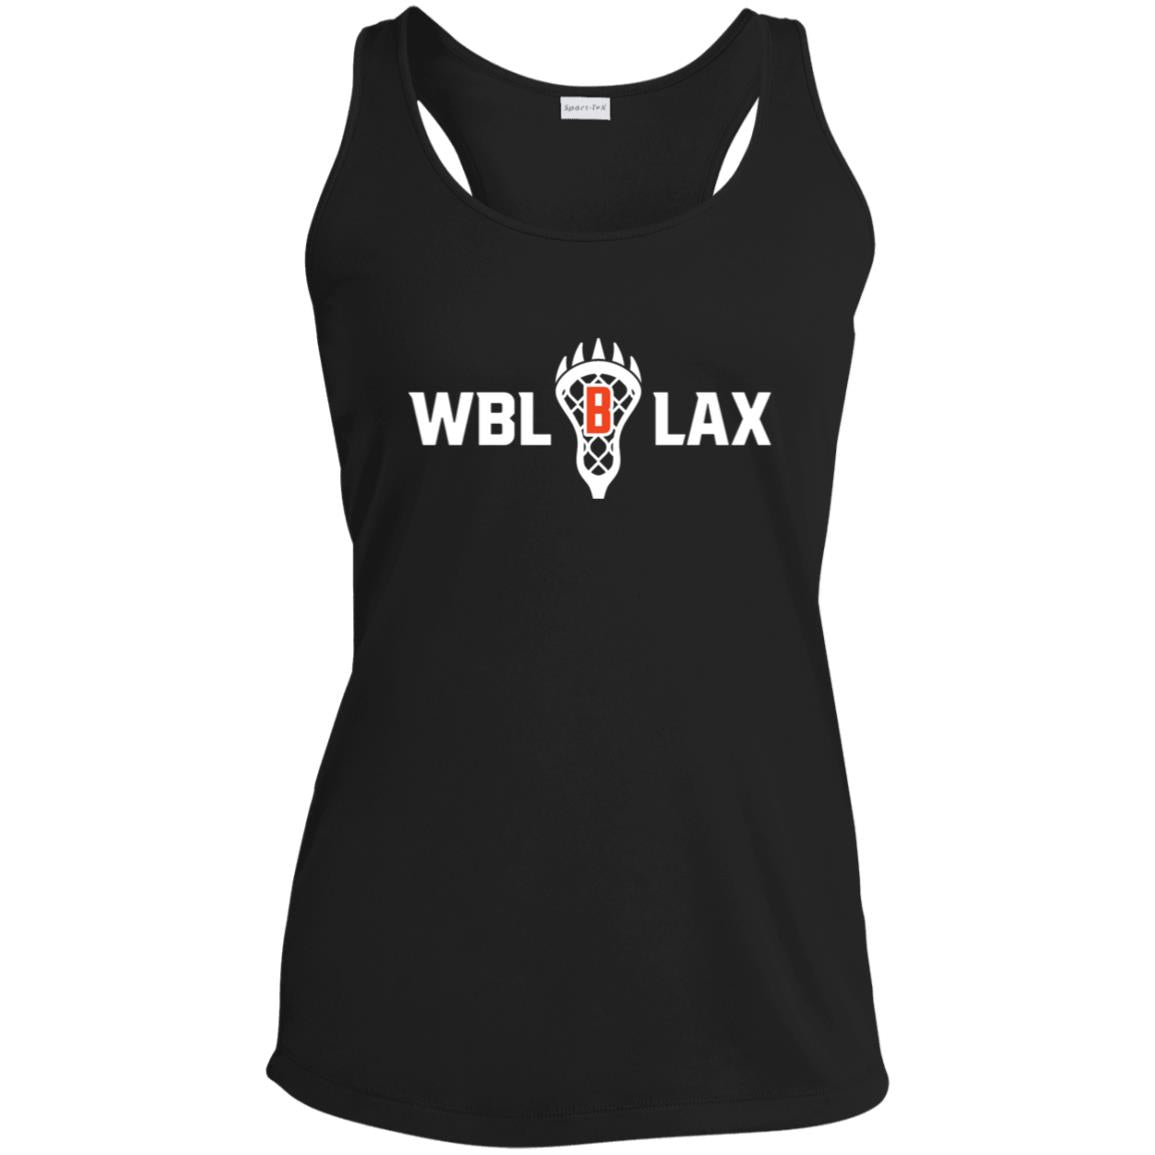 WBLAX Women's Performance Racerback Tank